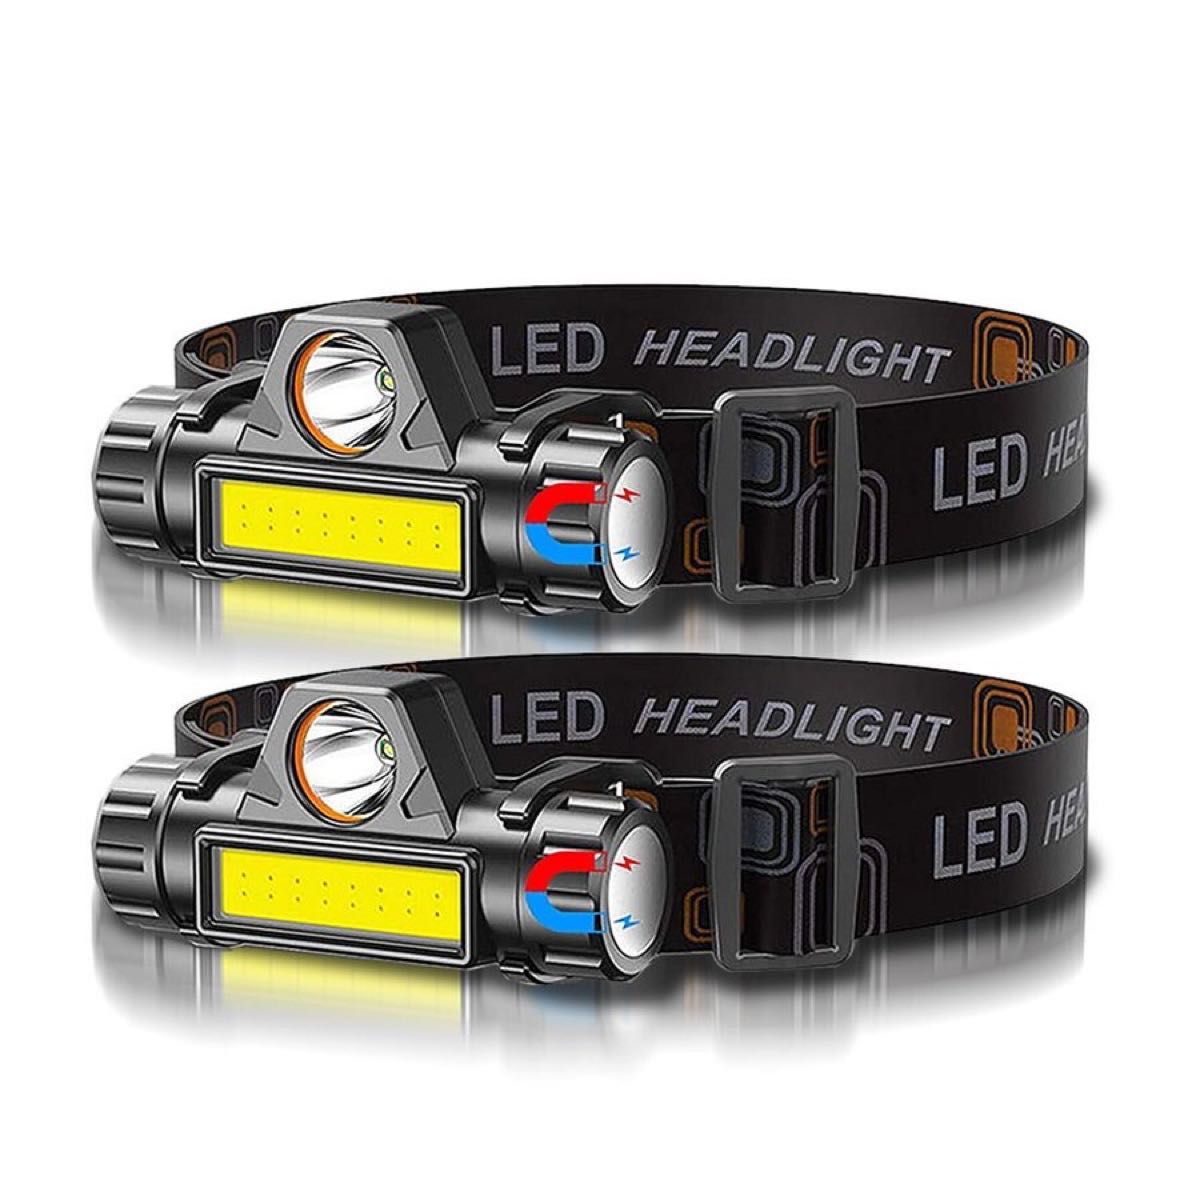 LED ヘッドライト 2台セット キャンプ 夜釣り アウトドア 夜間作業 防災 磁石 高輝度 防水 夜間作業灯 USB充電